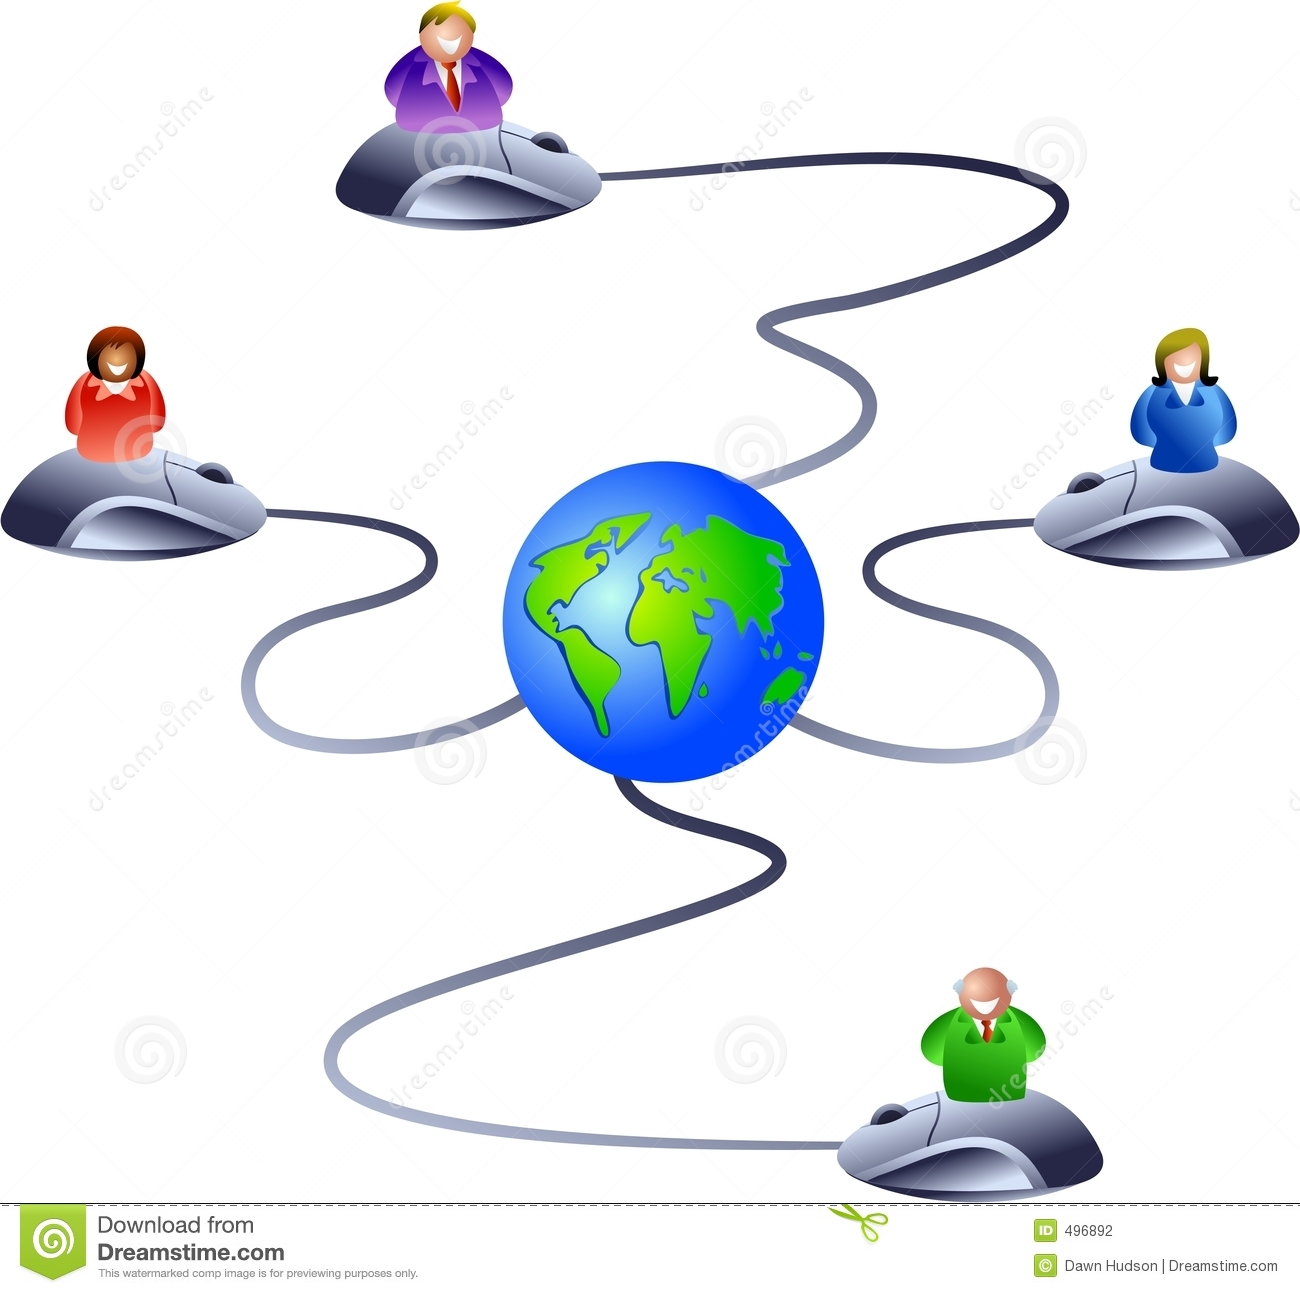 network clipart internet network